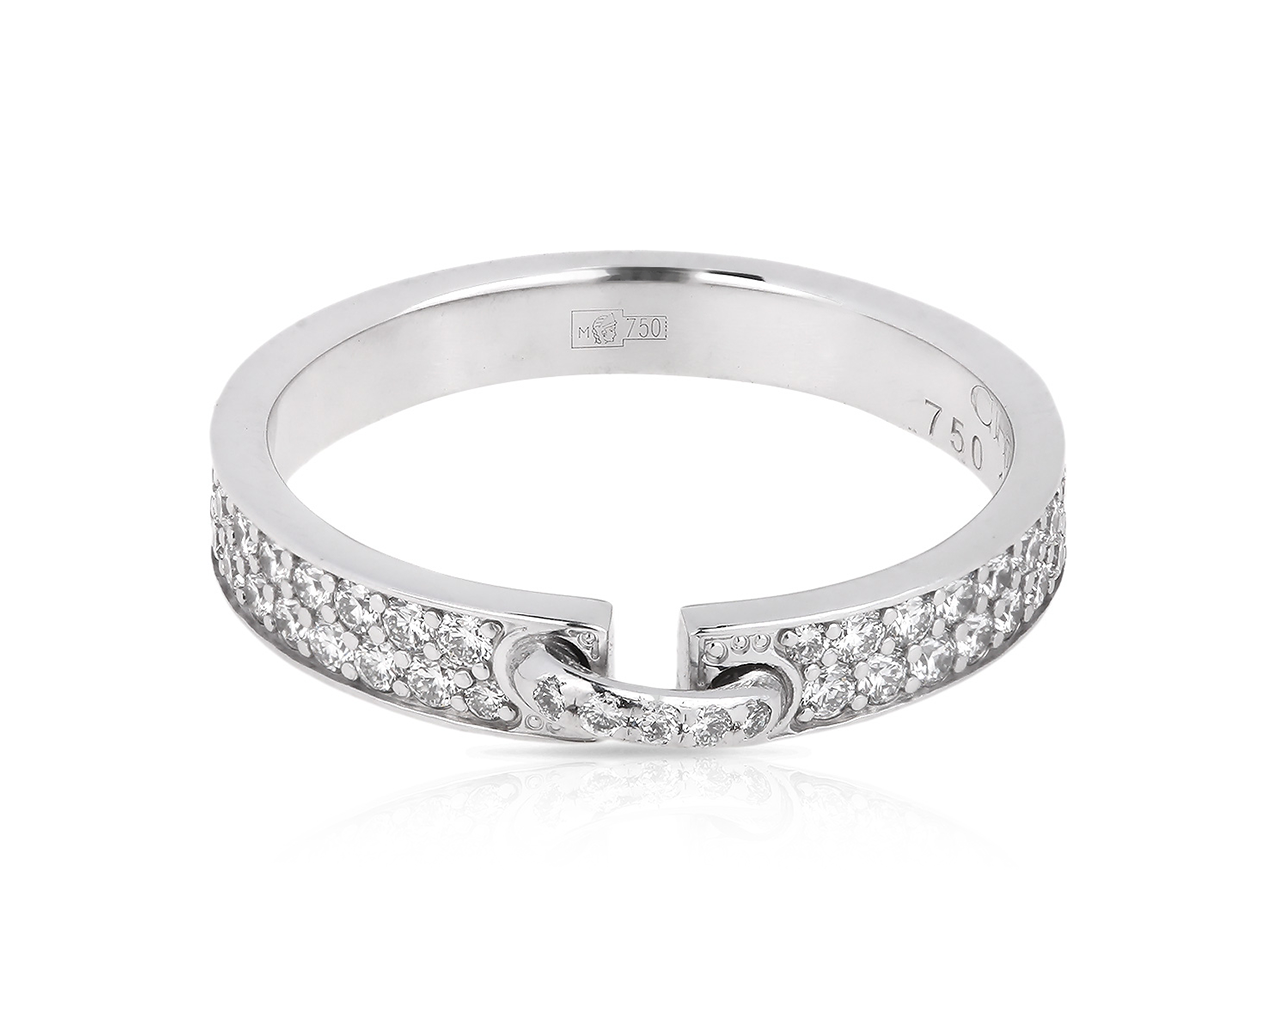 Модное золотое кольцо с бриллиантами 0.51ct Chaumet